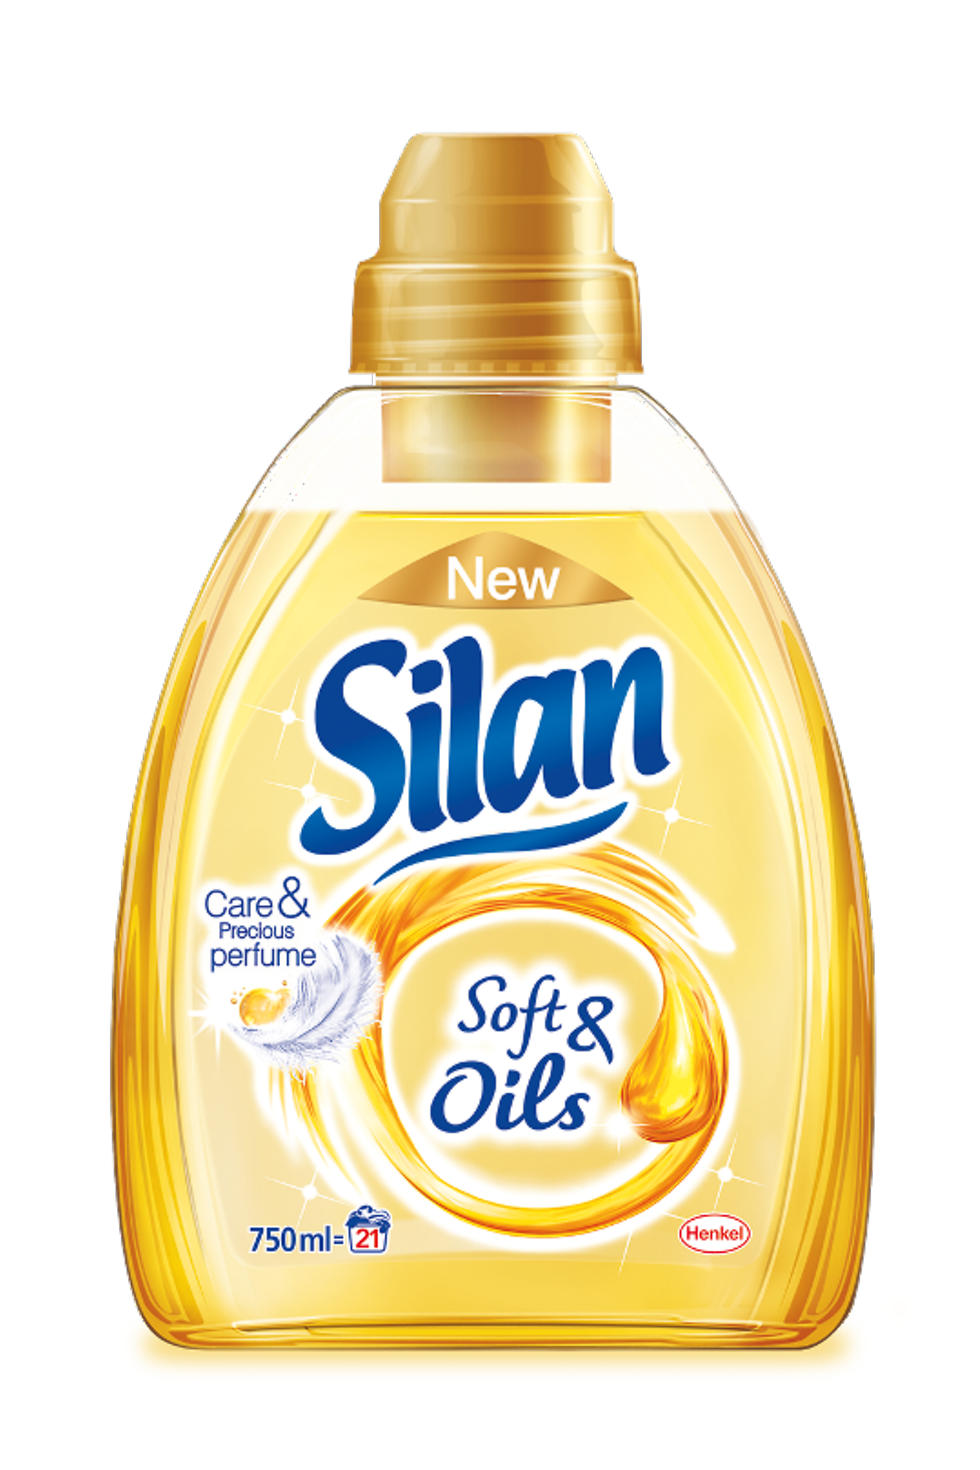 
Silan Soft & Oils Gold 750ml